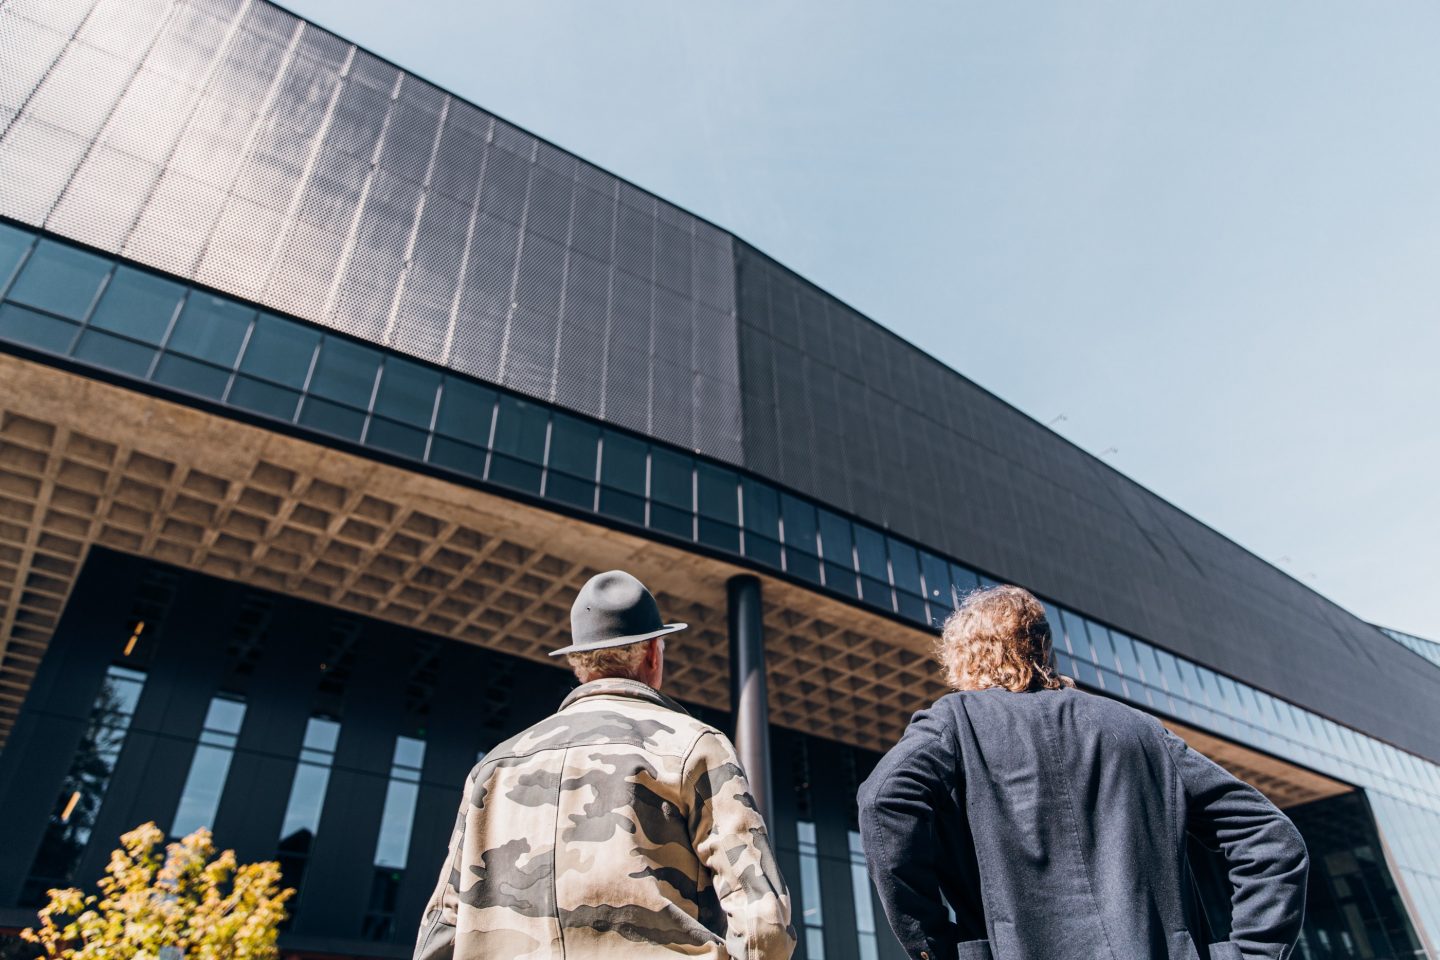 Olson Kundig — The LeBron James Innovation Center at Nike World